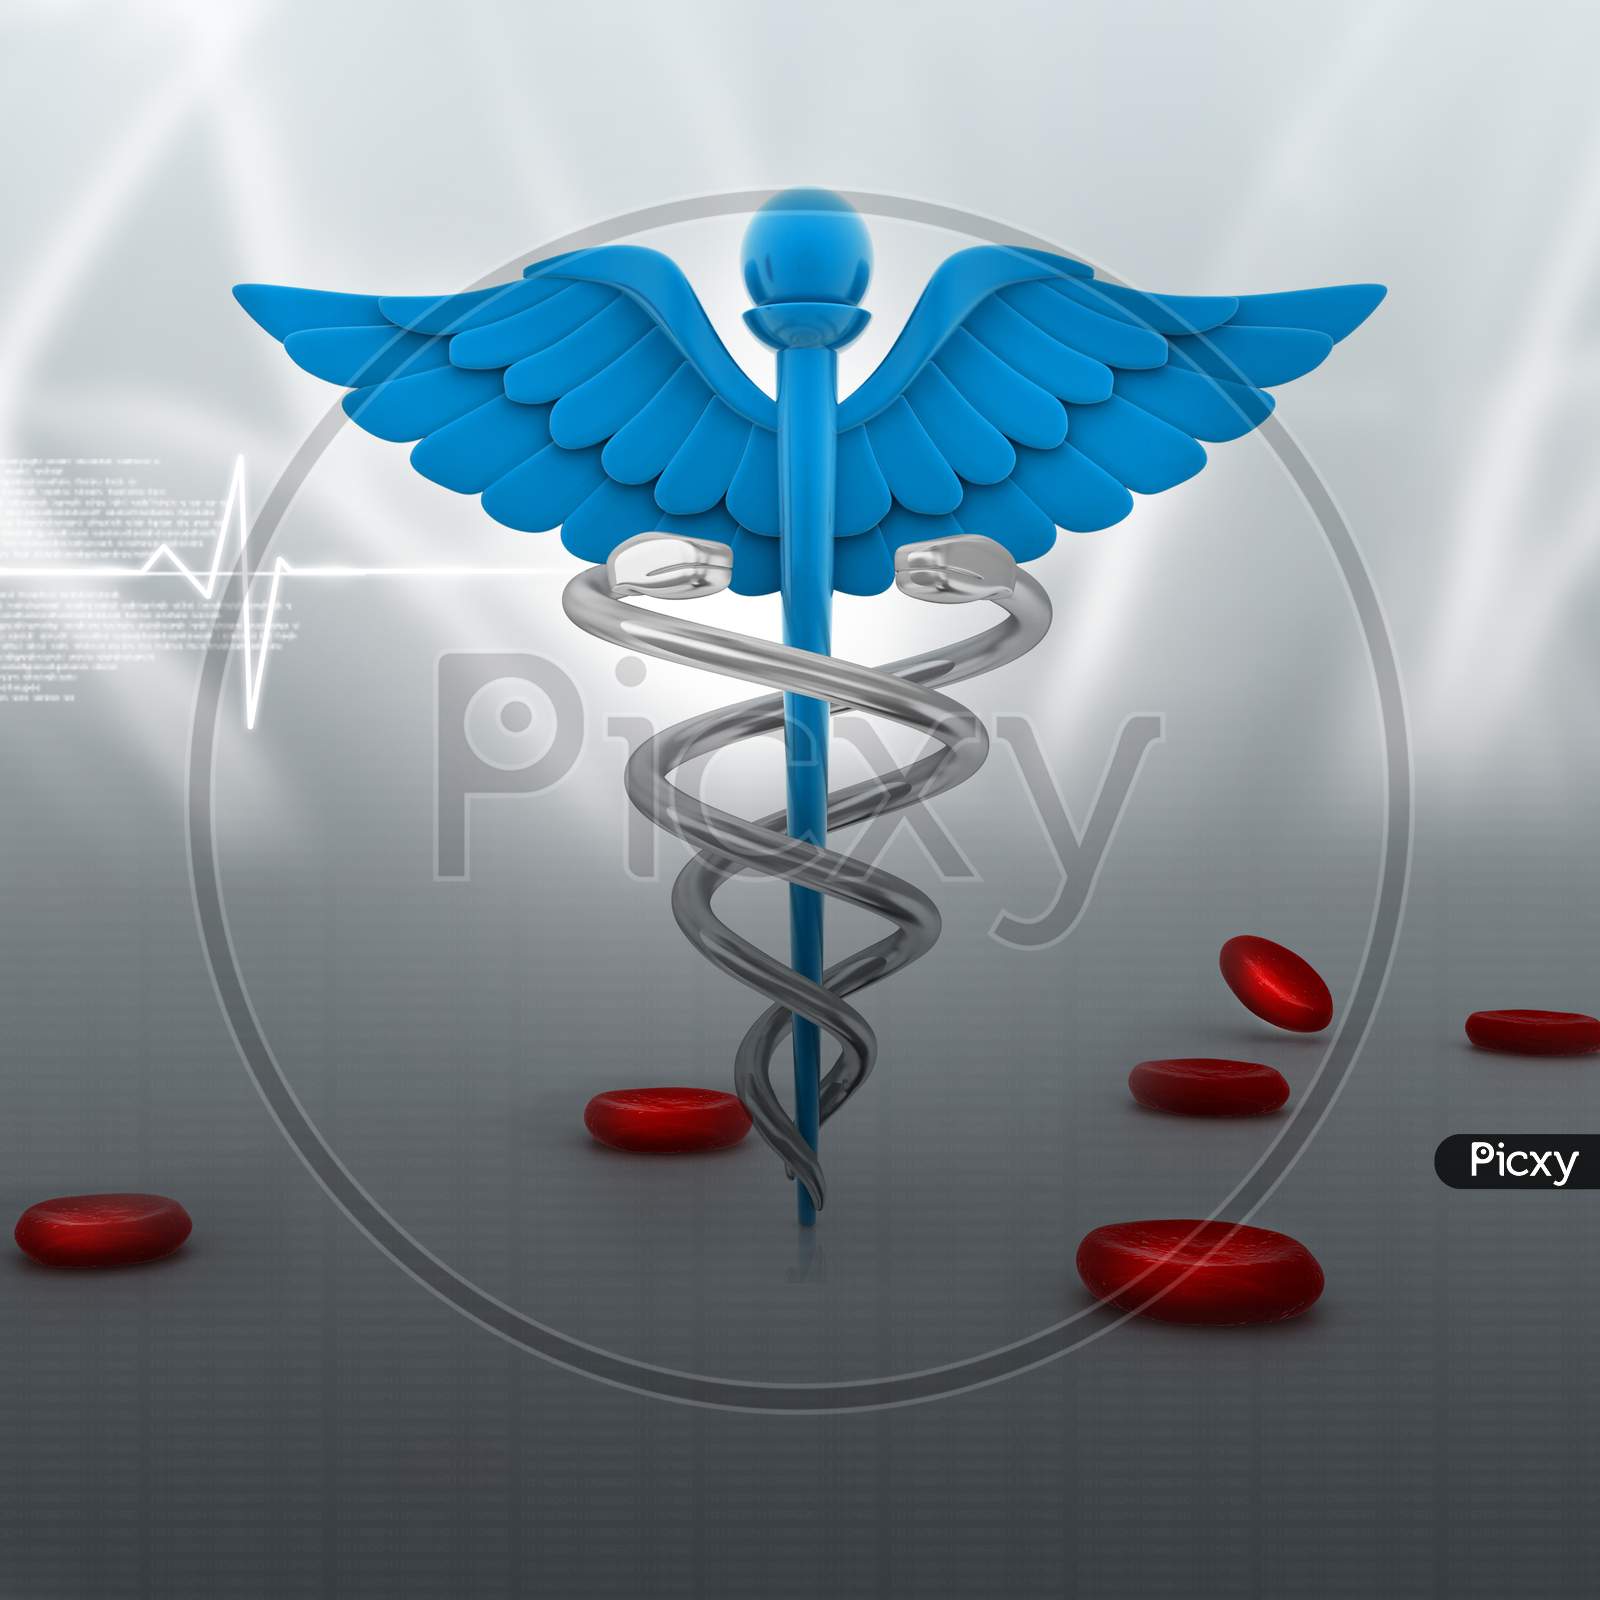 Digital Illustration Of Medical Symbol In Abstract Background